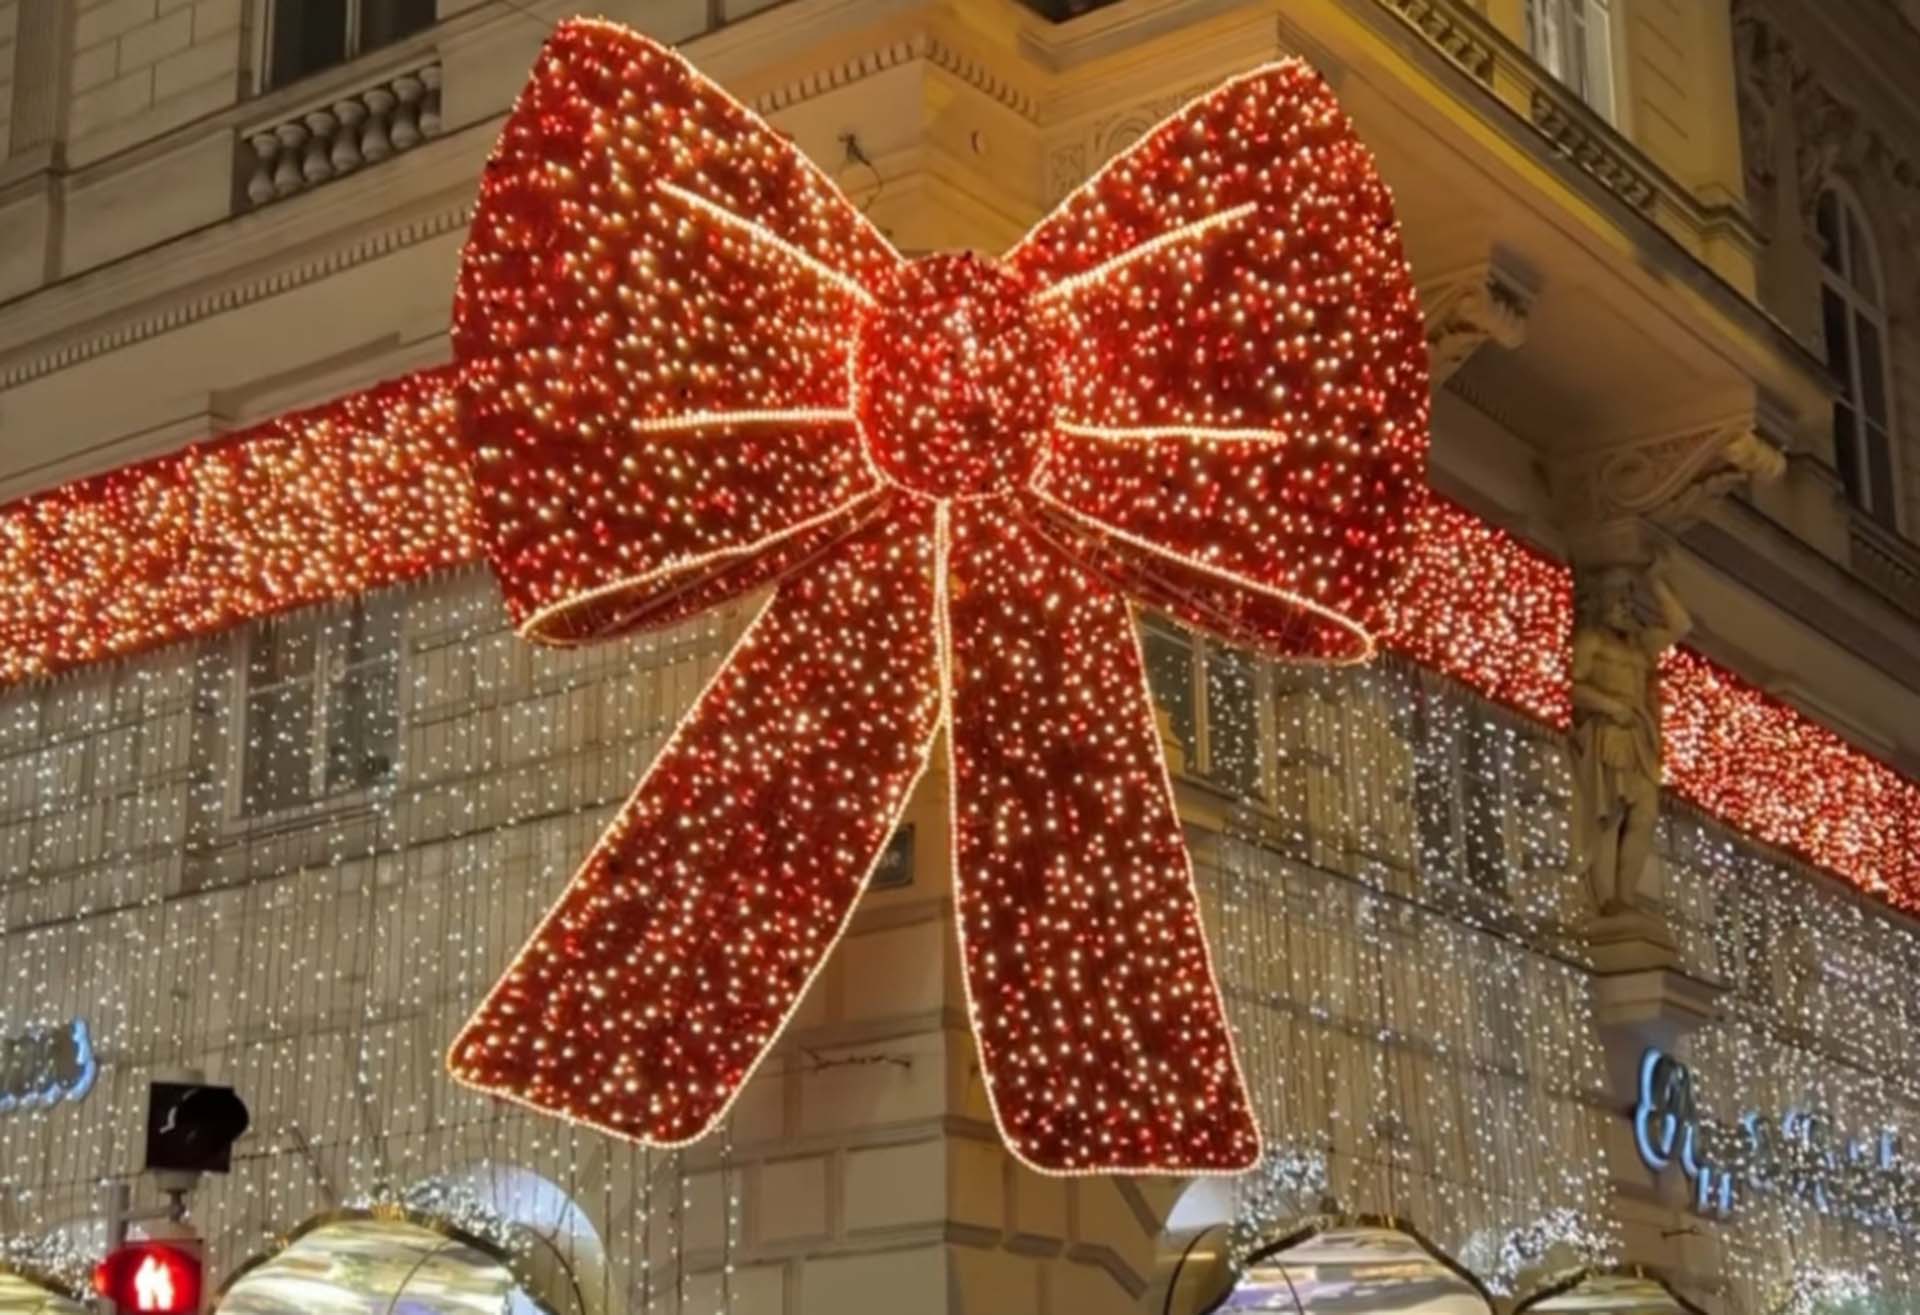 Vienna’s Christmas Bows: A Timeless Elegance